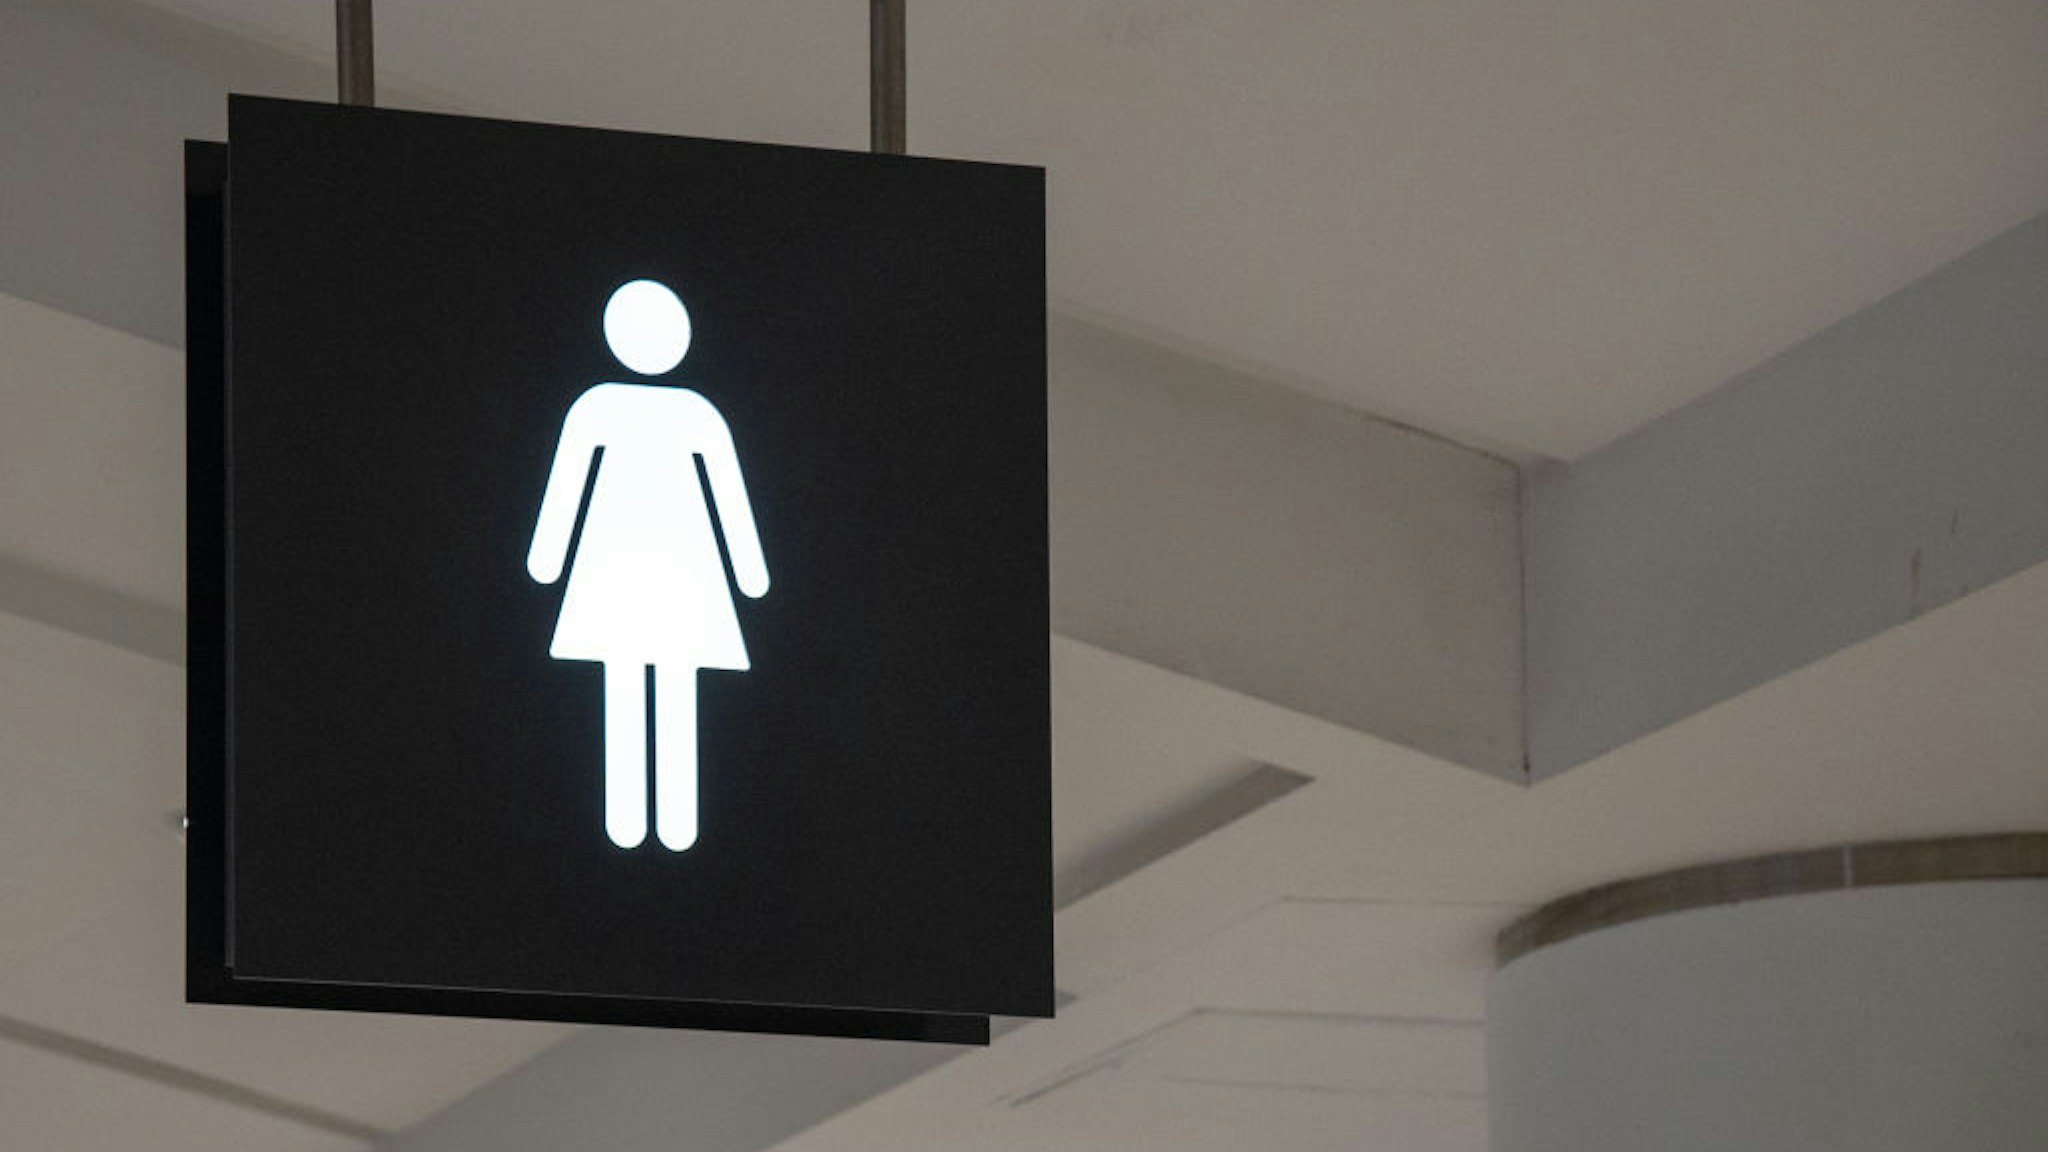 TORONTO, ONTARIO, CANADA - 2019/02/02: Public sign in a washroom or bathroom destined for women in Pearson International Airport. (Photo by Roberto Machado Noa/LightRocket via Getty Images)